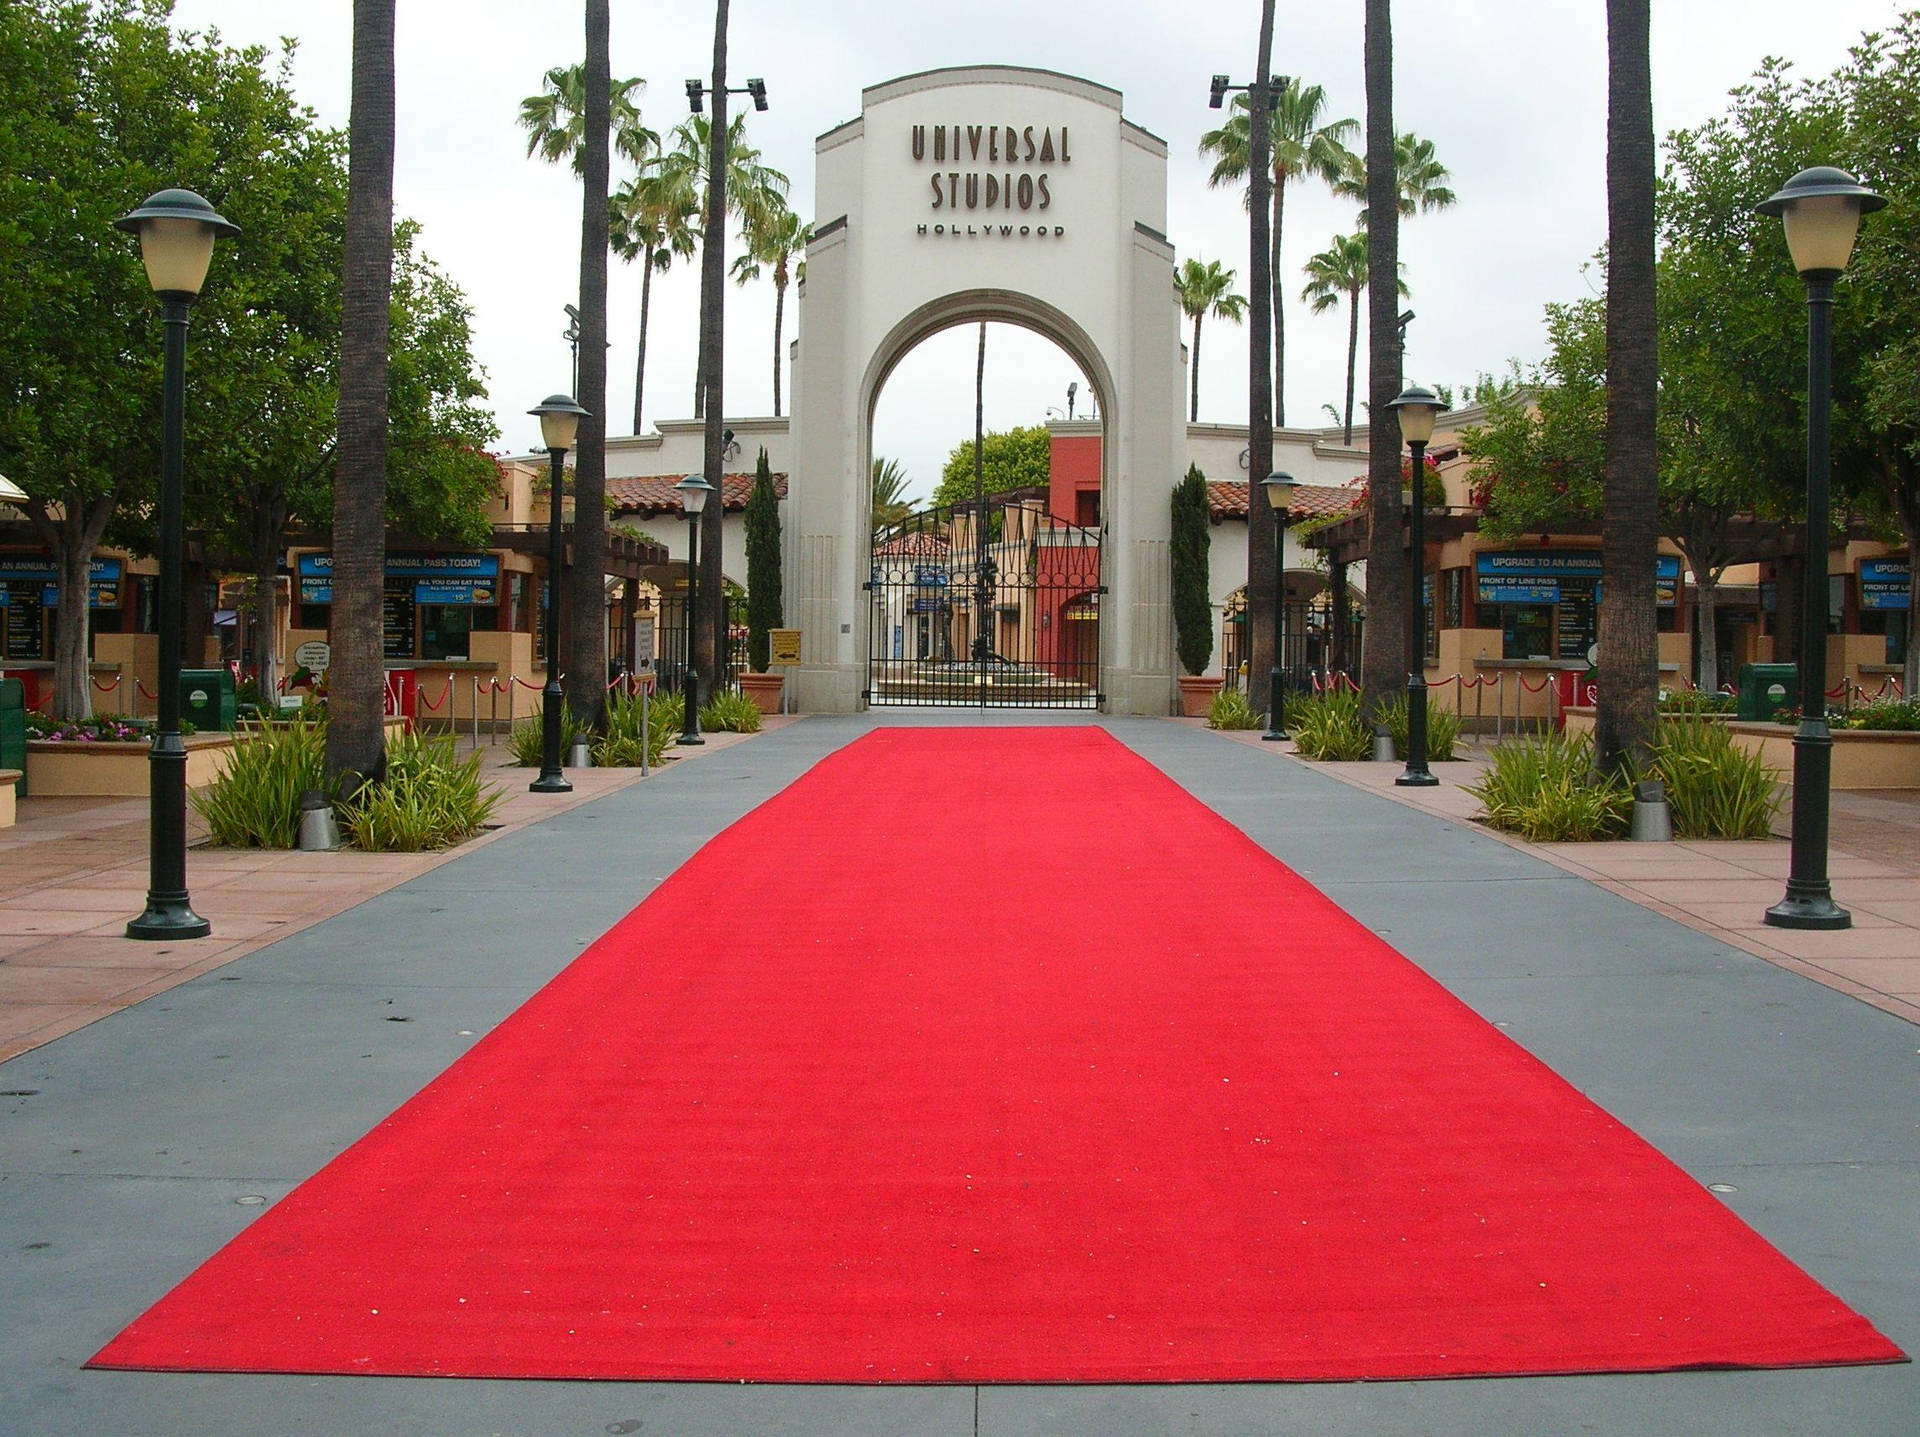 Universal Studios Red Carpet Background